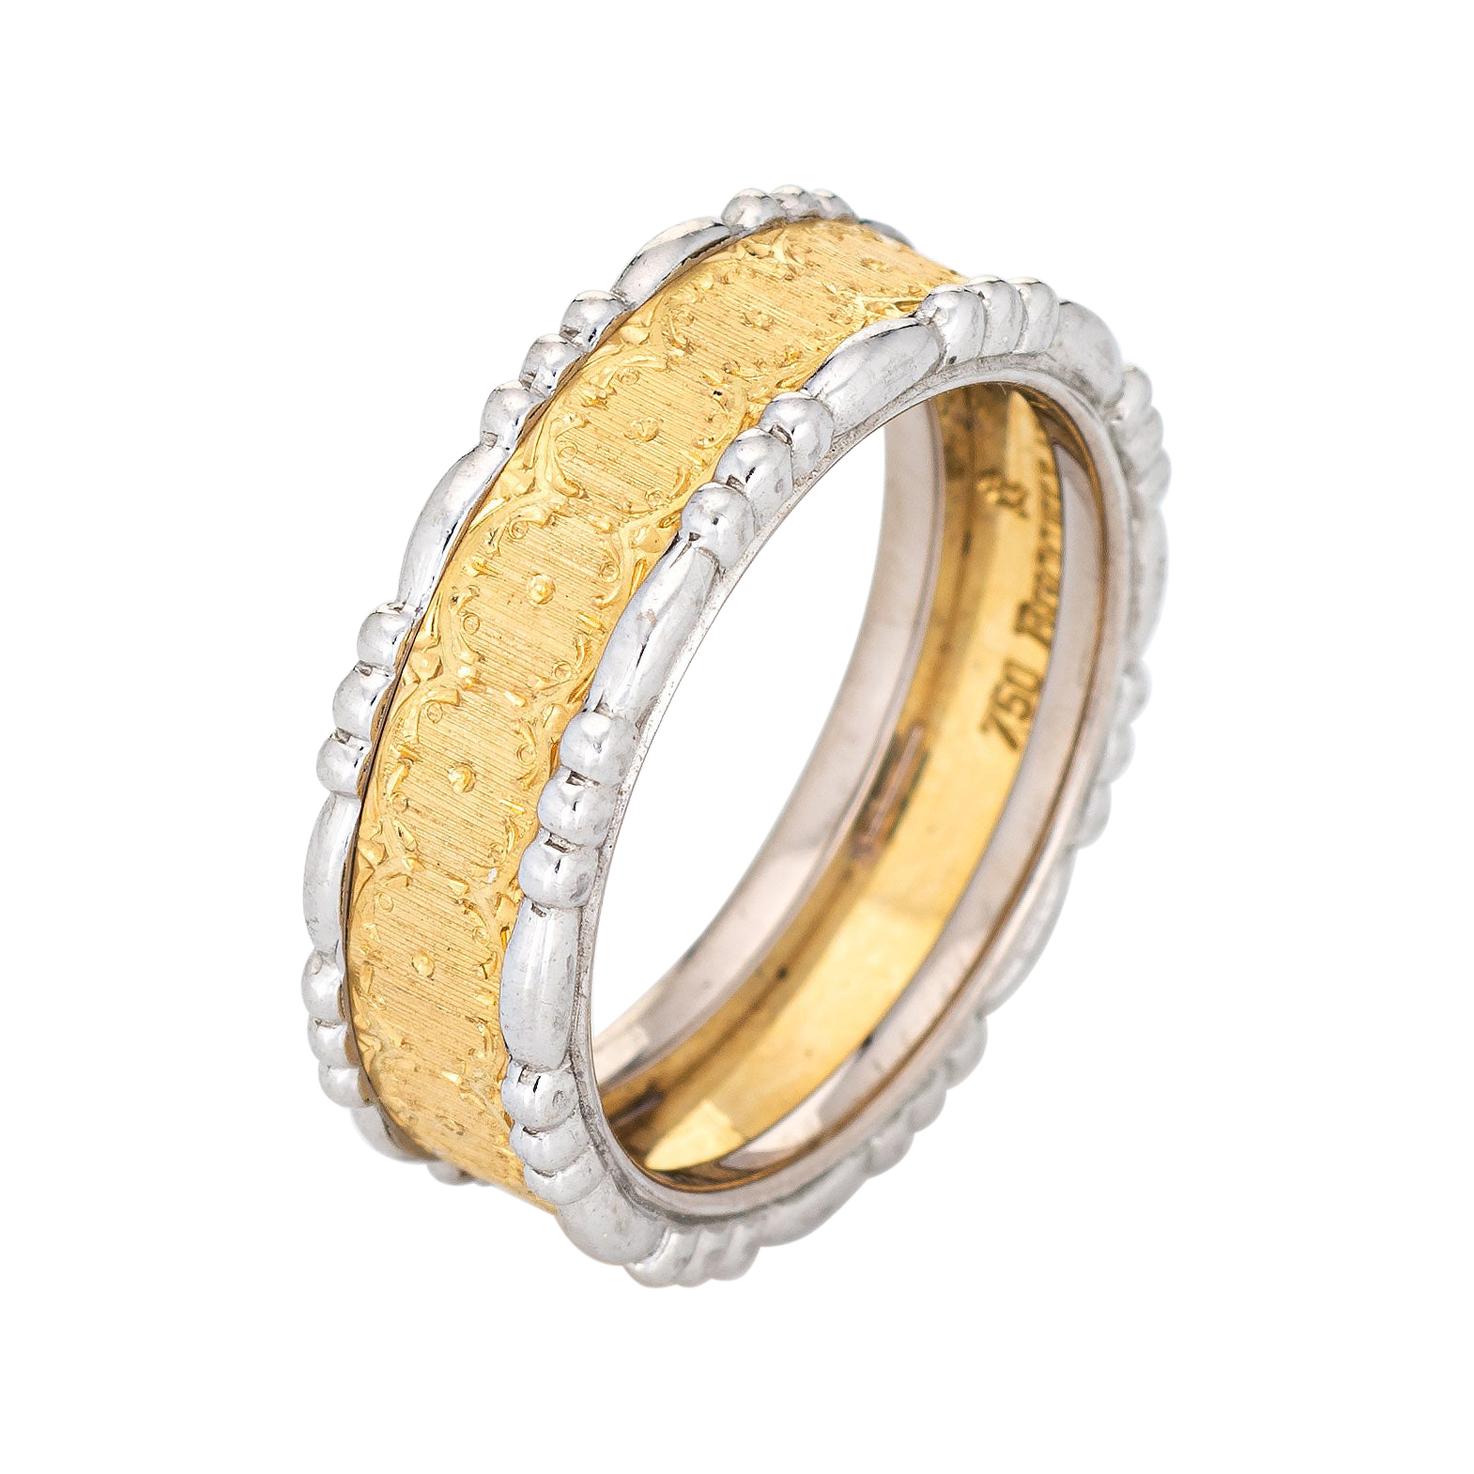 Buccellati Prestigio Band Vintage 18k Yellow Gold Ring 5 Estate Signed Jewelry For Sale